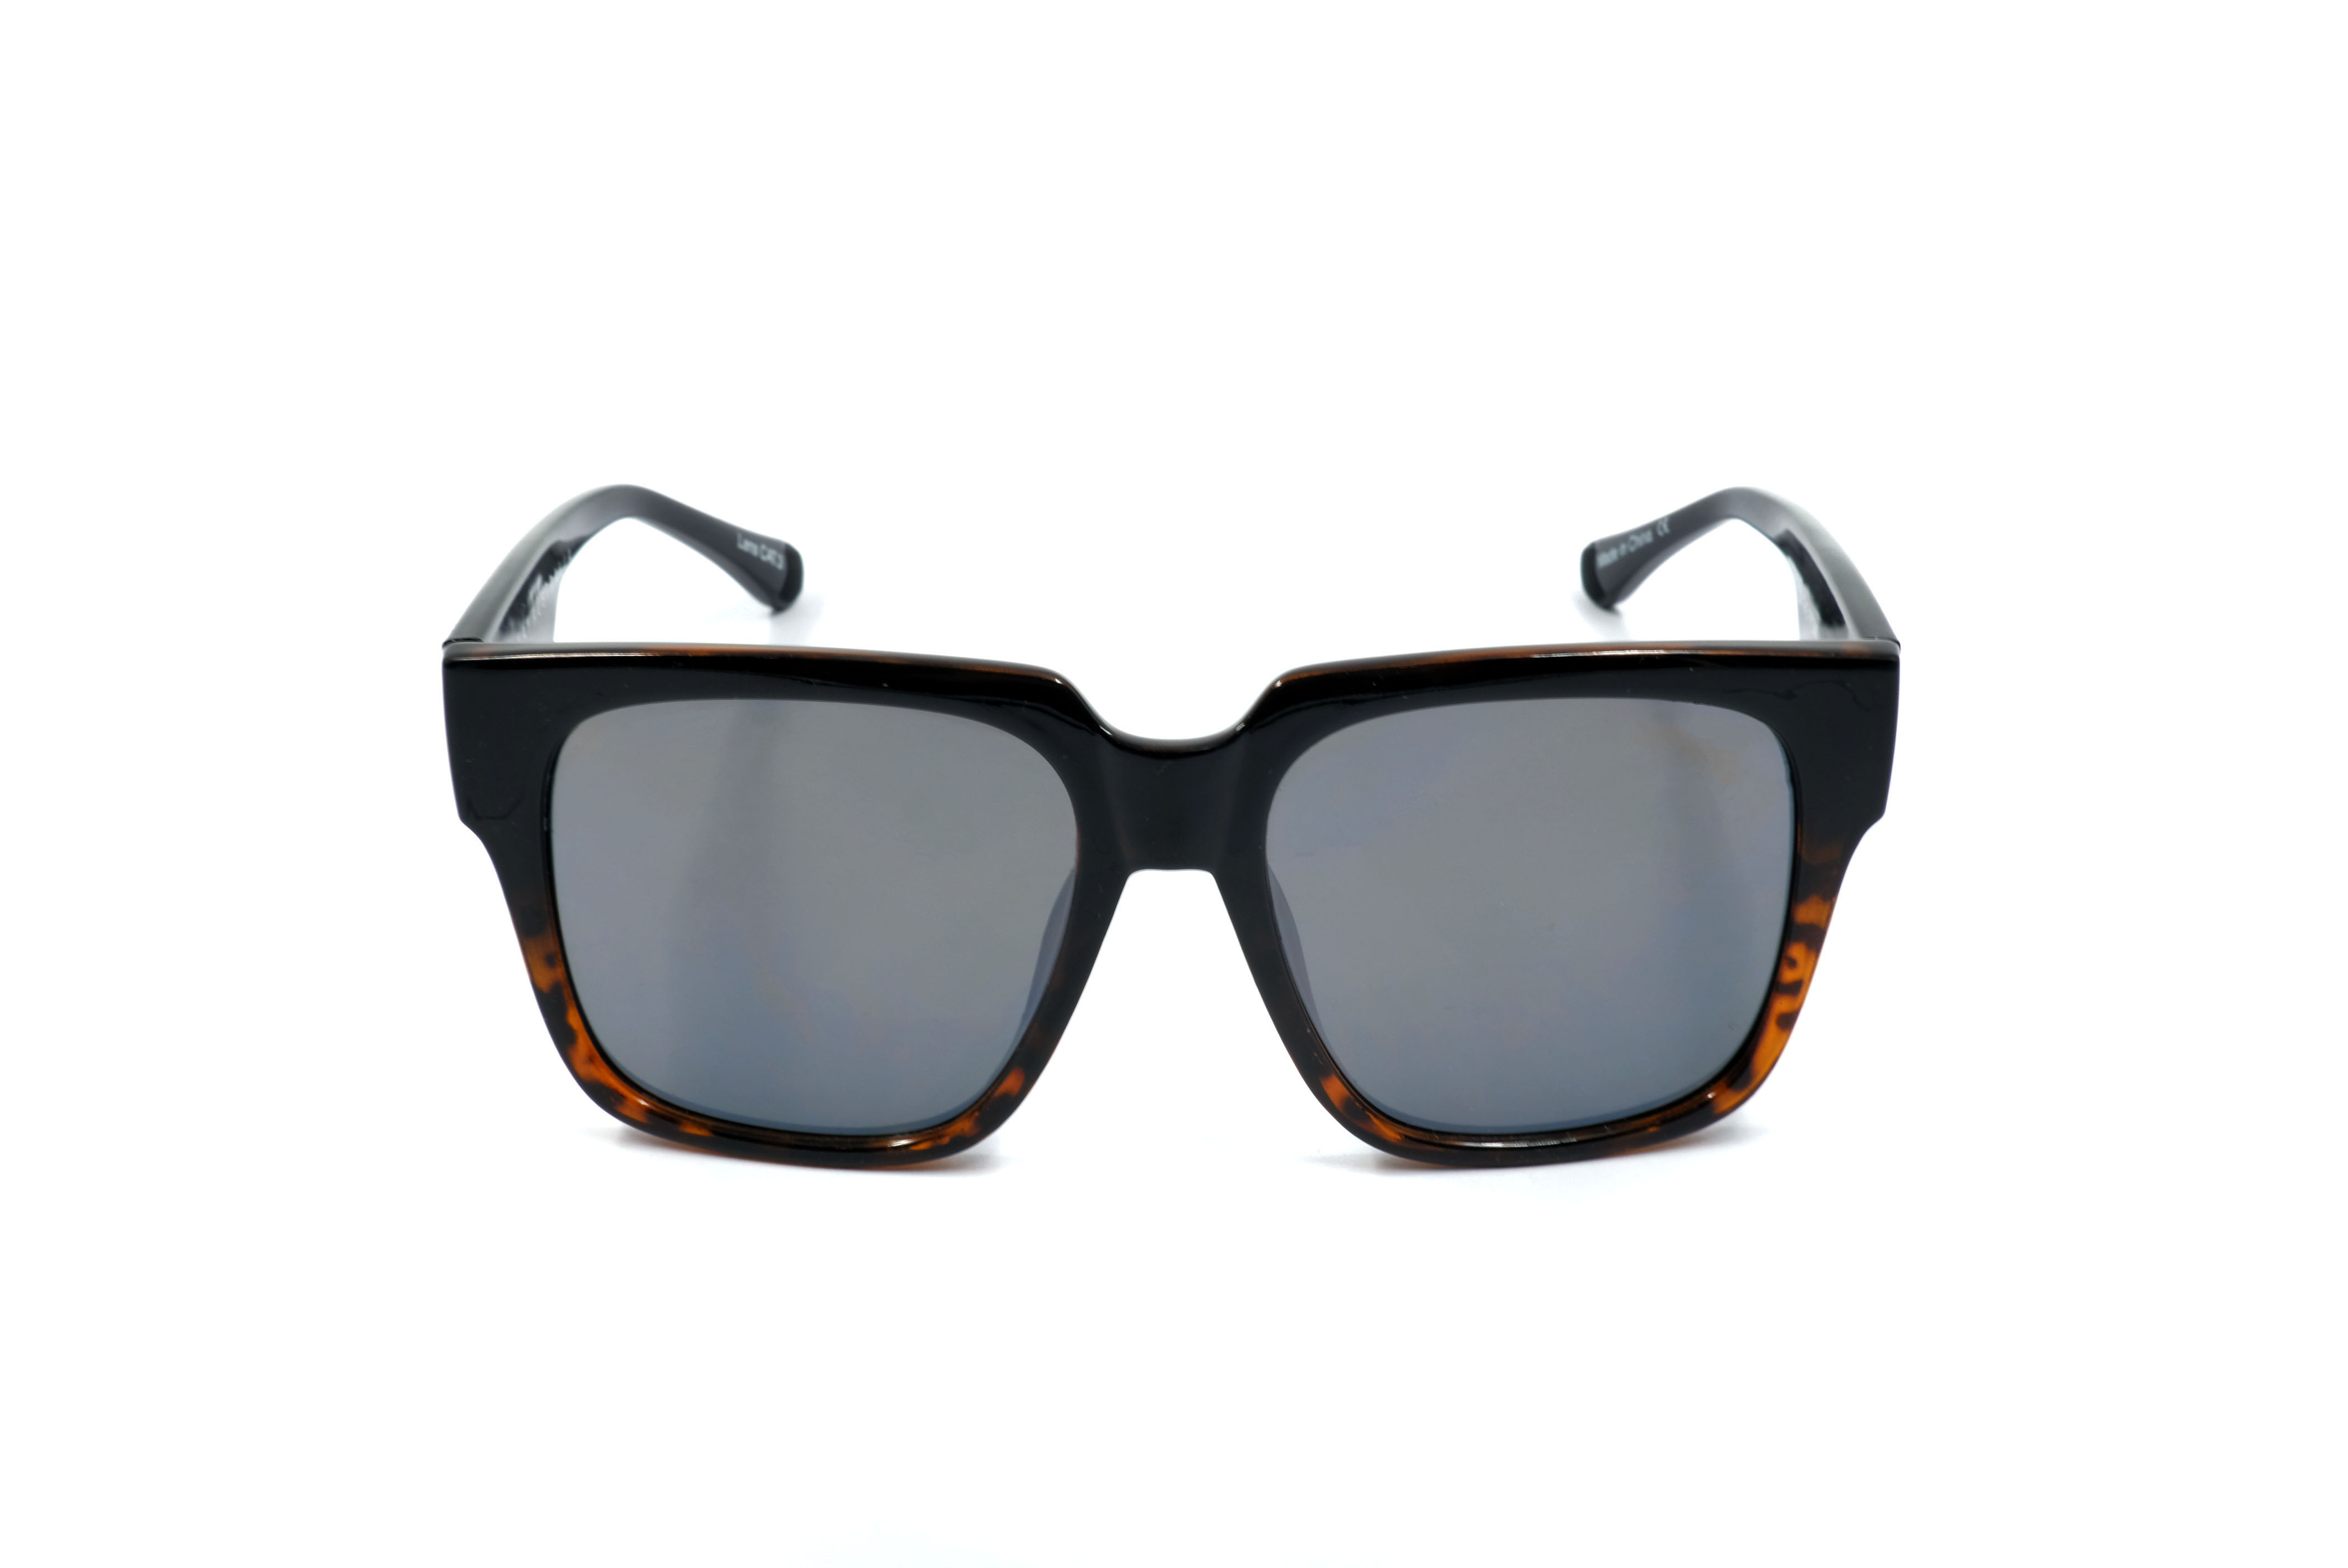 Travel fashion business trend men women unisex sunglasses 2021 Gradient grey square frame anti-UV polarized glasses